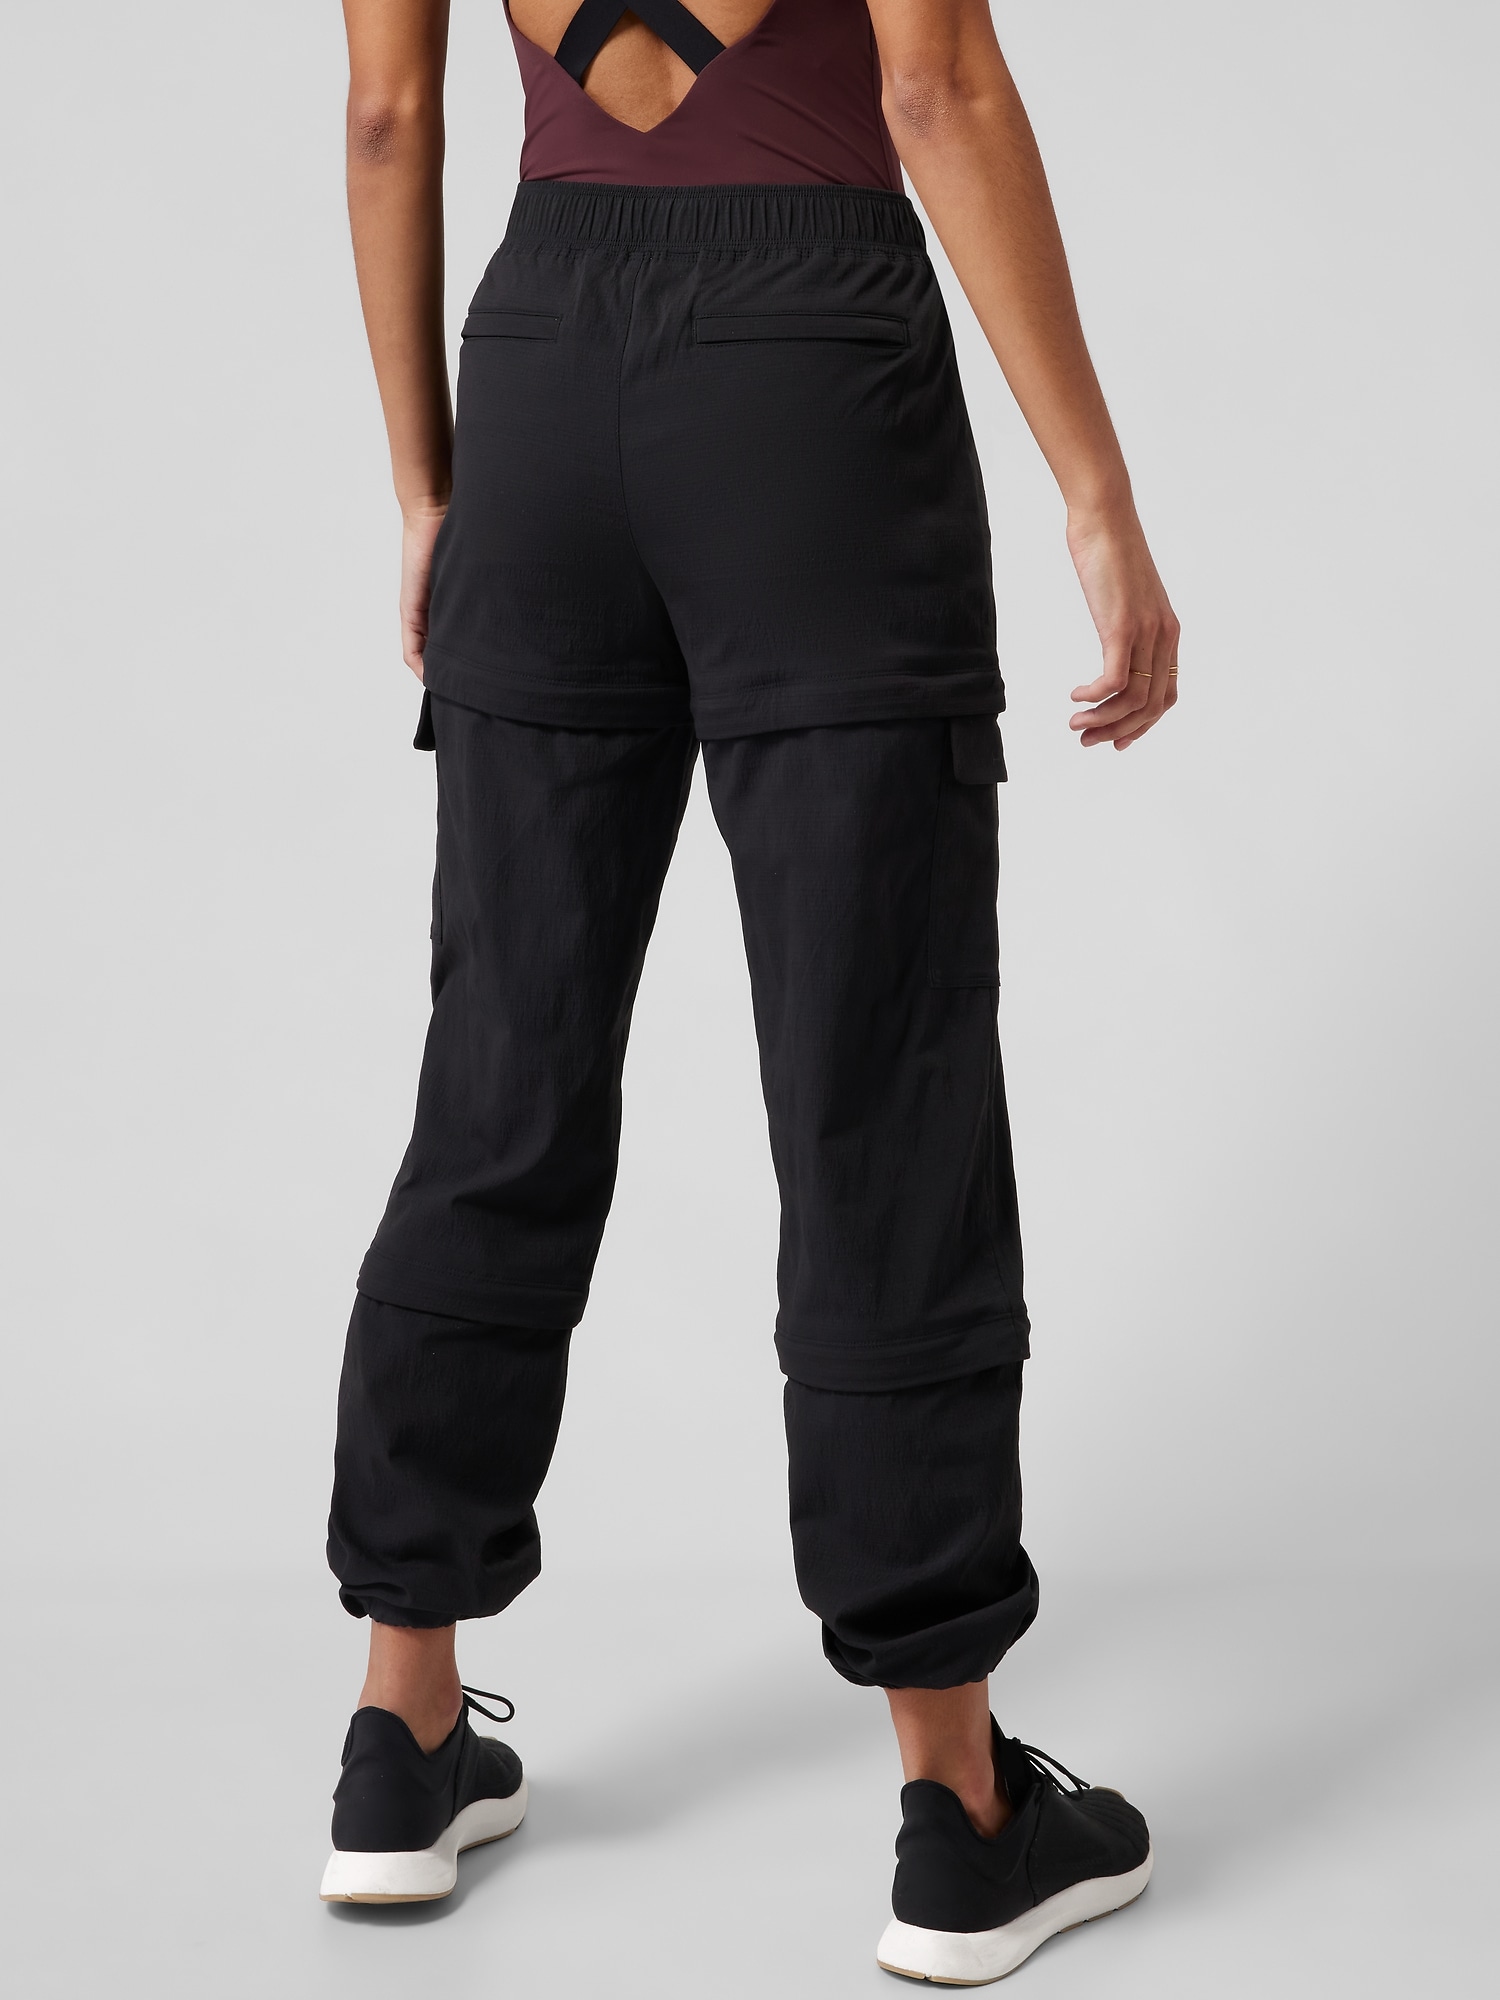 Women Cargo Hiking Pants Trek Travel Outdoor Nylon Spandex size M stretch  active